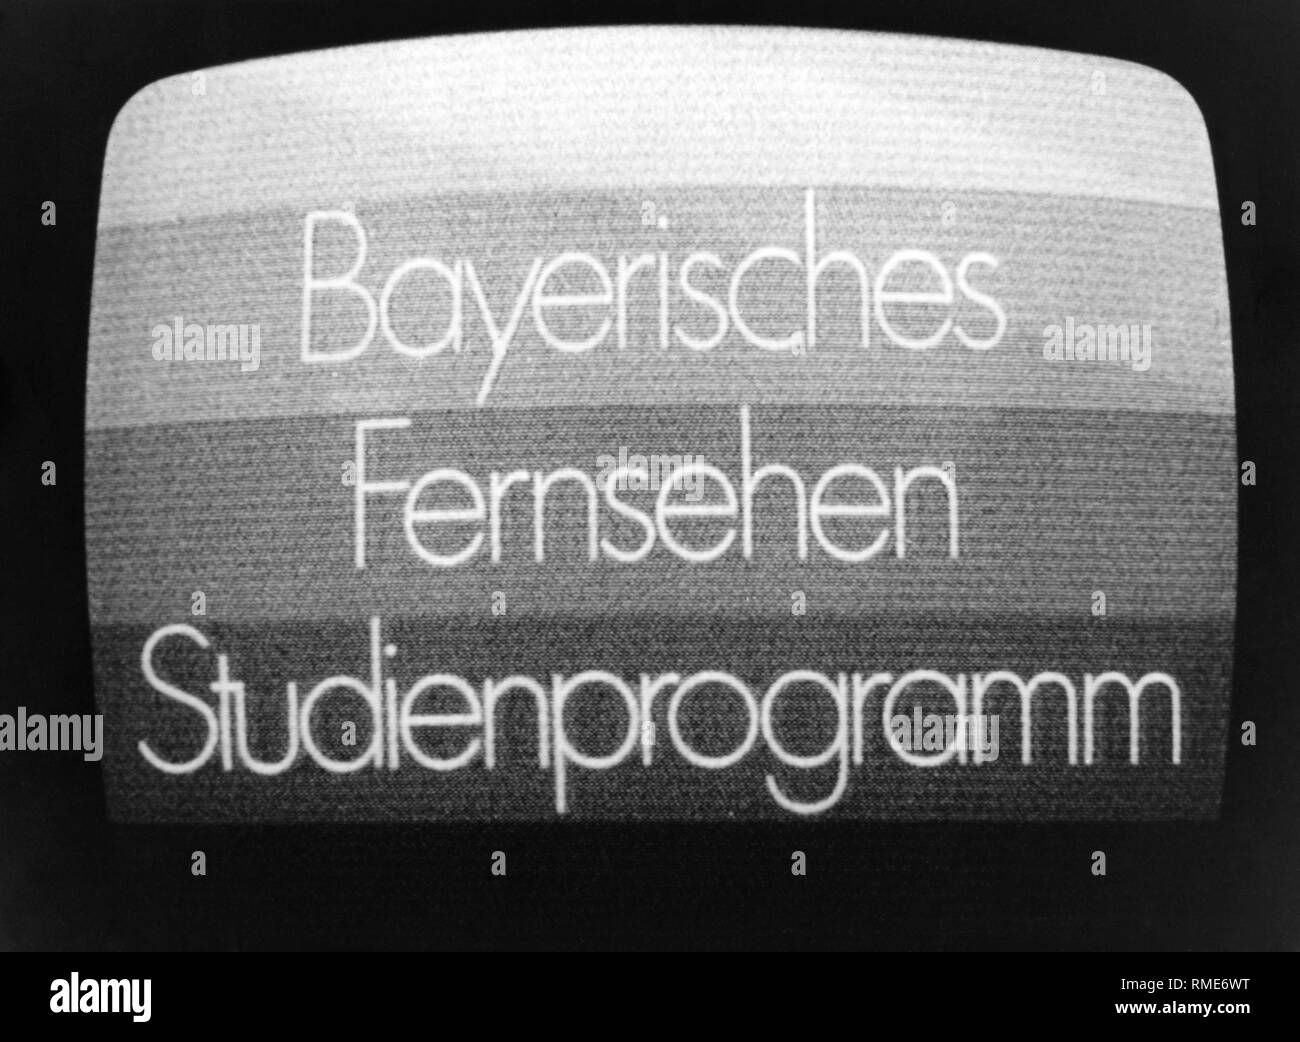 'Bayerisches Fernsehen Studienprogramm' (undated photo, presumably early 1980s) Stock Photo